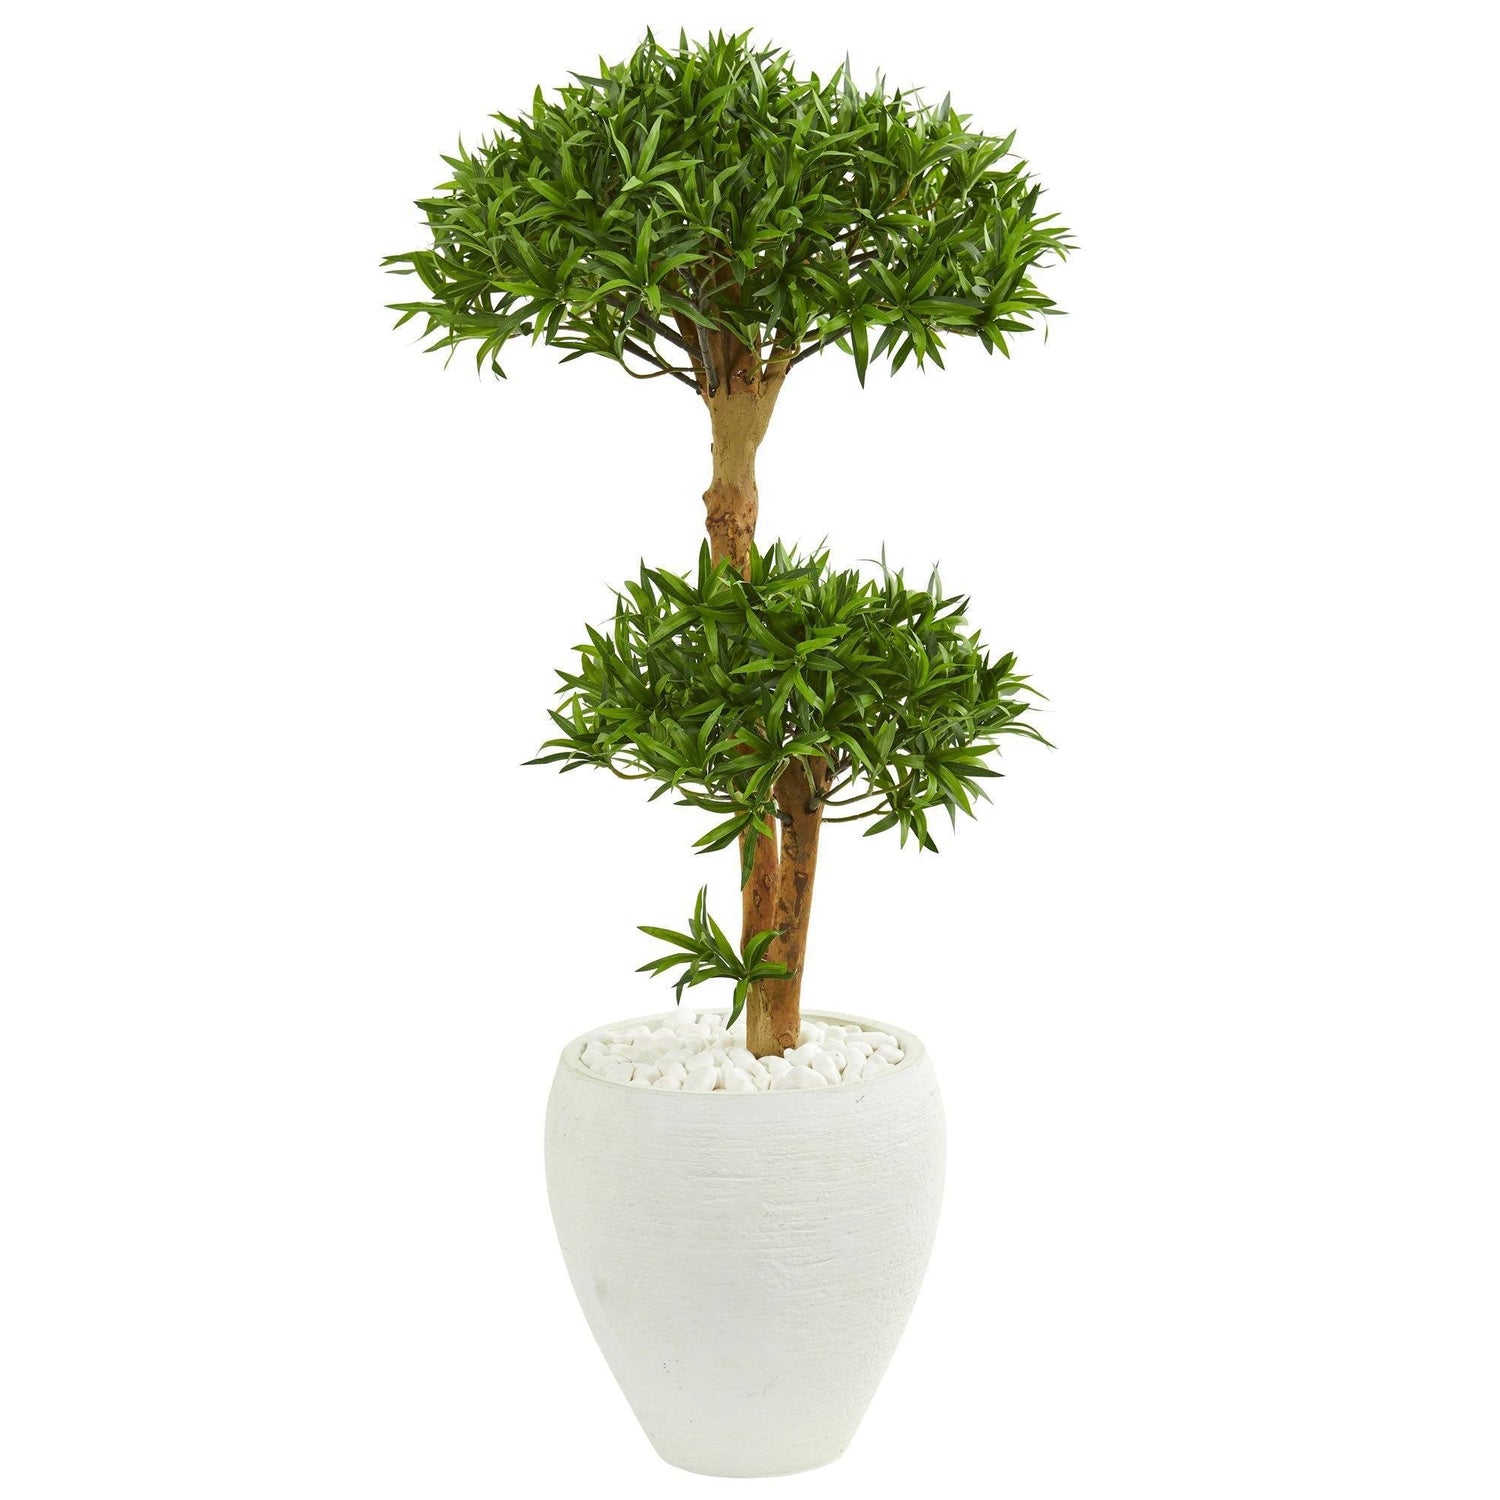 3’ Bonsai Styled Podocarpus Artificial Tree in White Planter